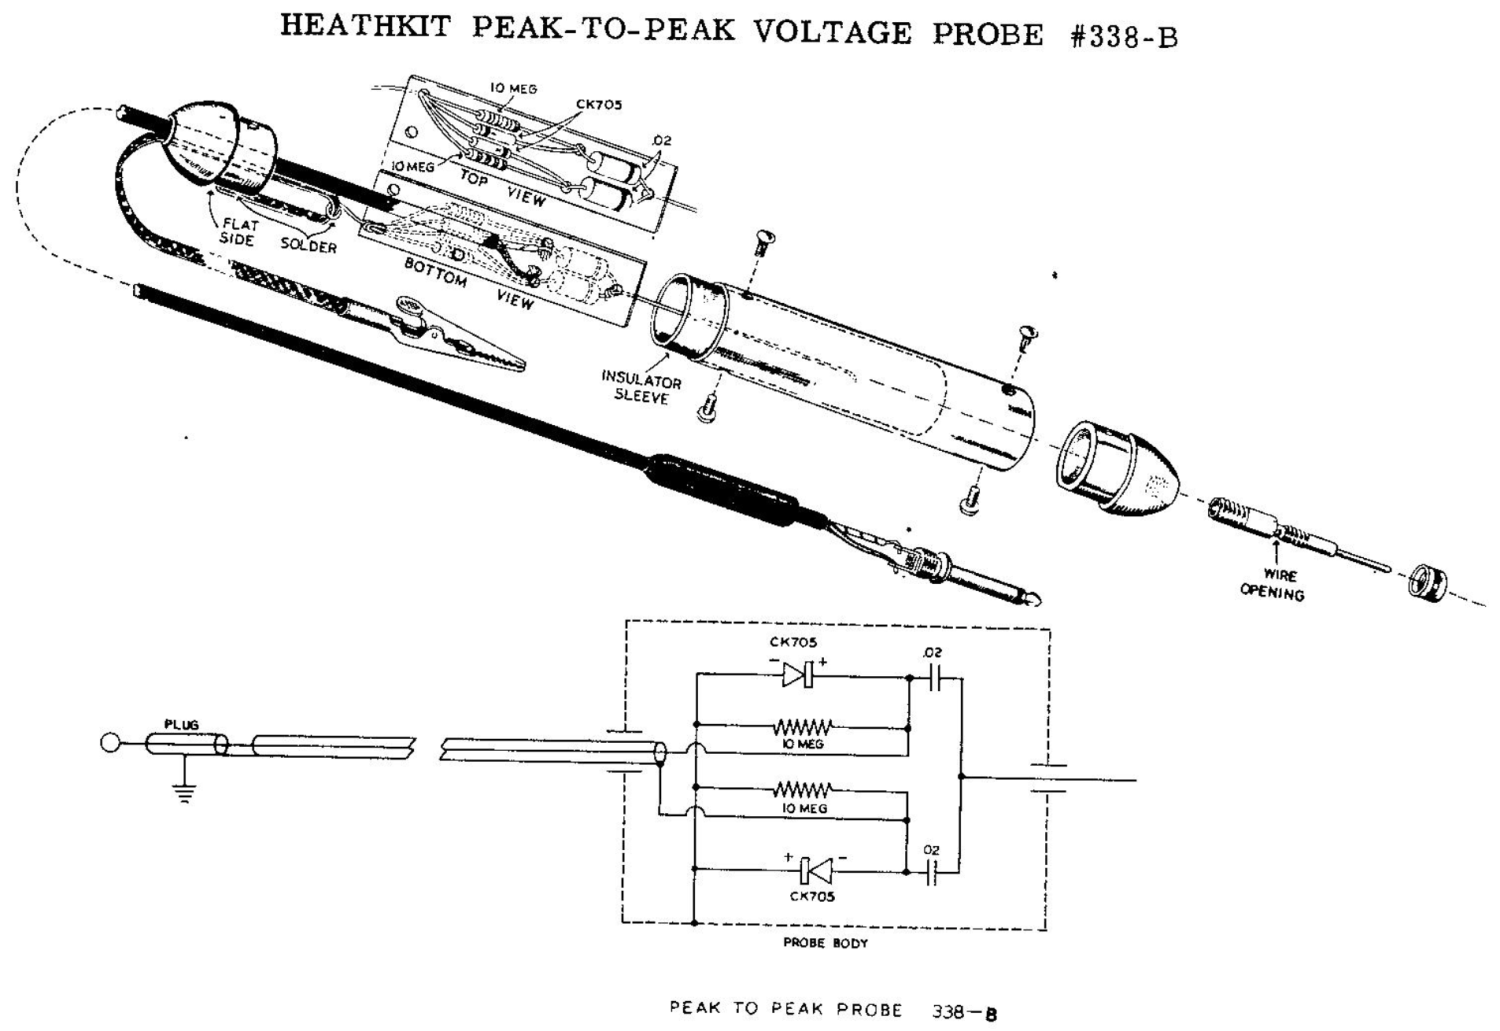 Heathkit 338-B Peak to Peak Voltage Probe Kit - Drawing